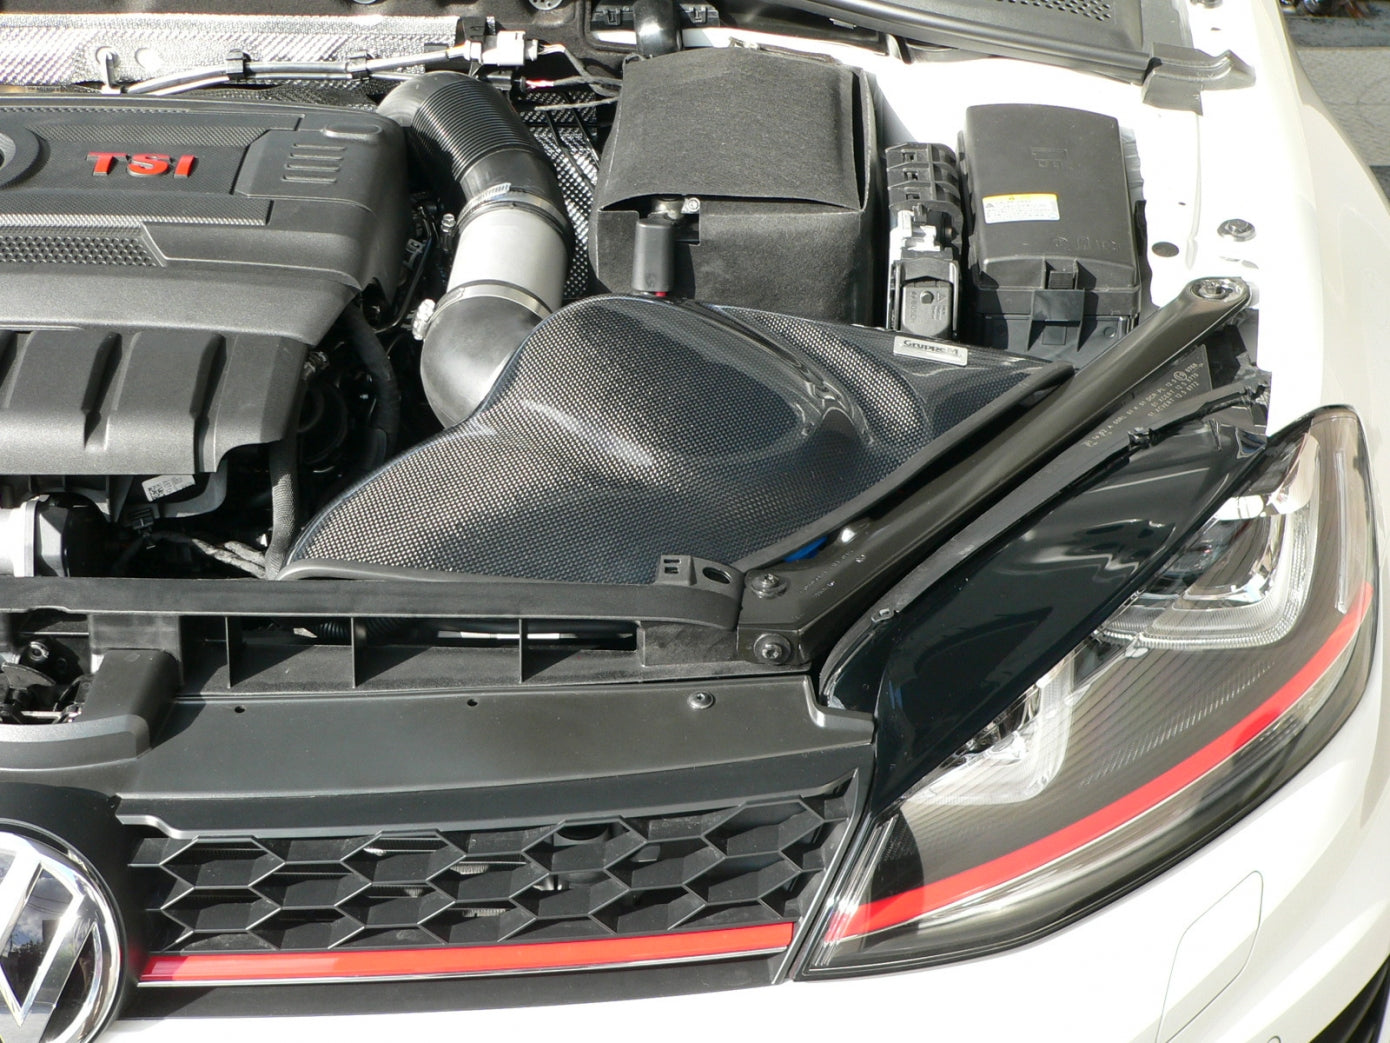 Gruppem Volkswagen Golf Gti 2013-2020 Mk7 2.0L Turbo Carbon Fiber Ram Air Intake System